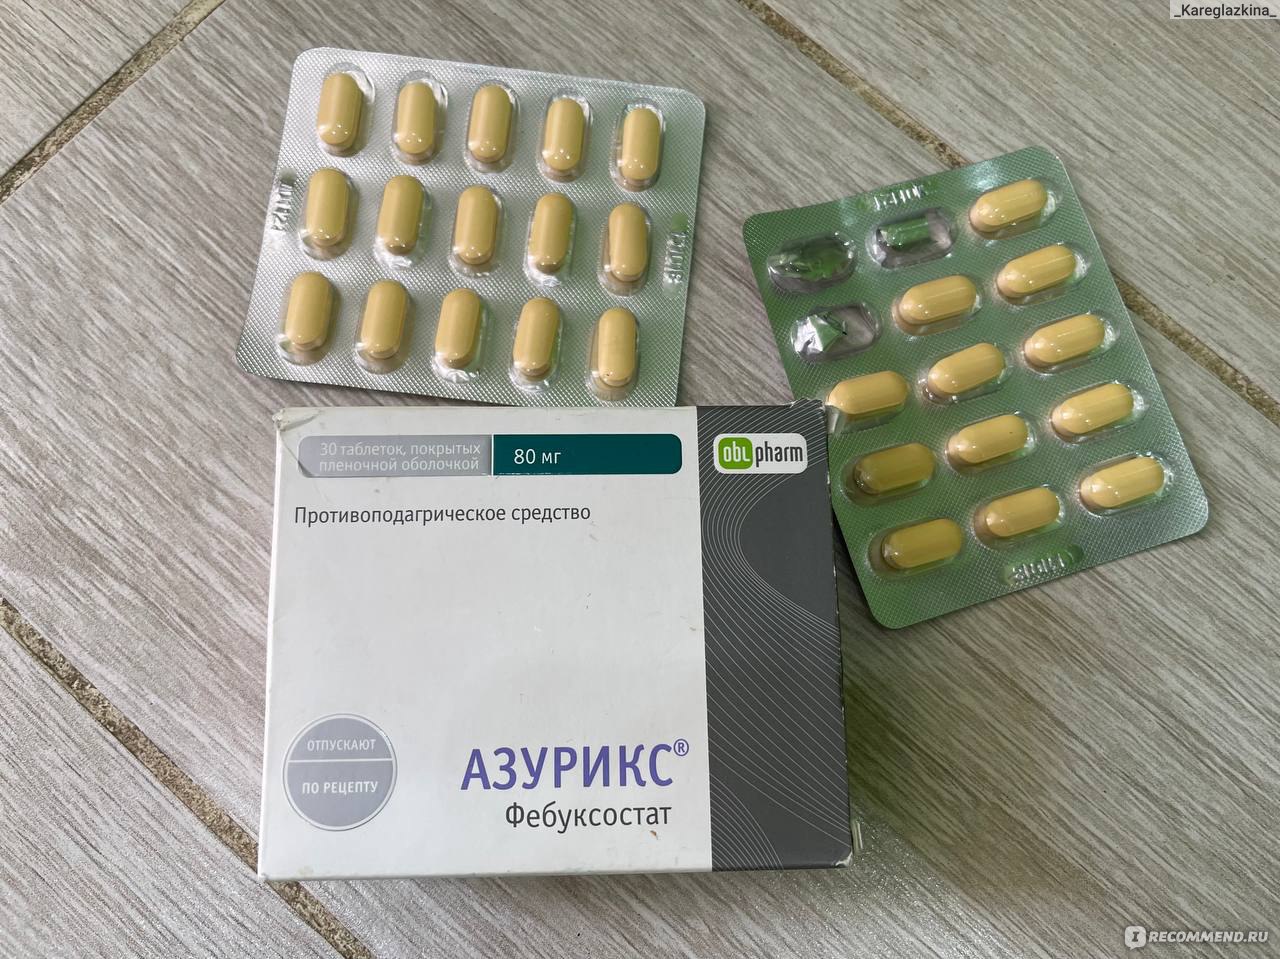 Лекарственный препарат Obl pharm Азурикс - «Современный препарат .